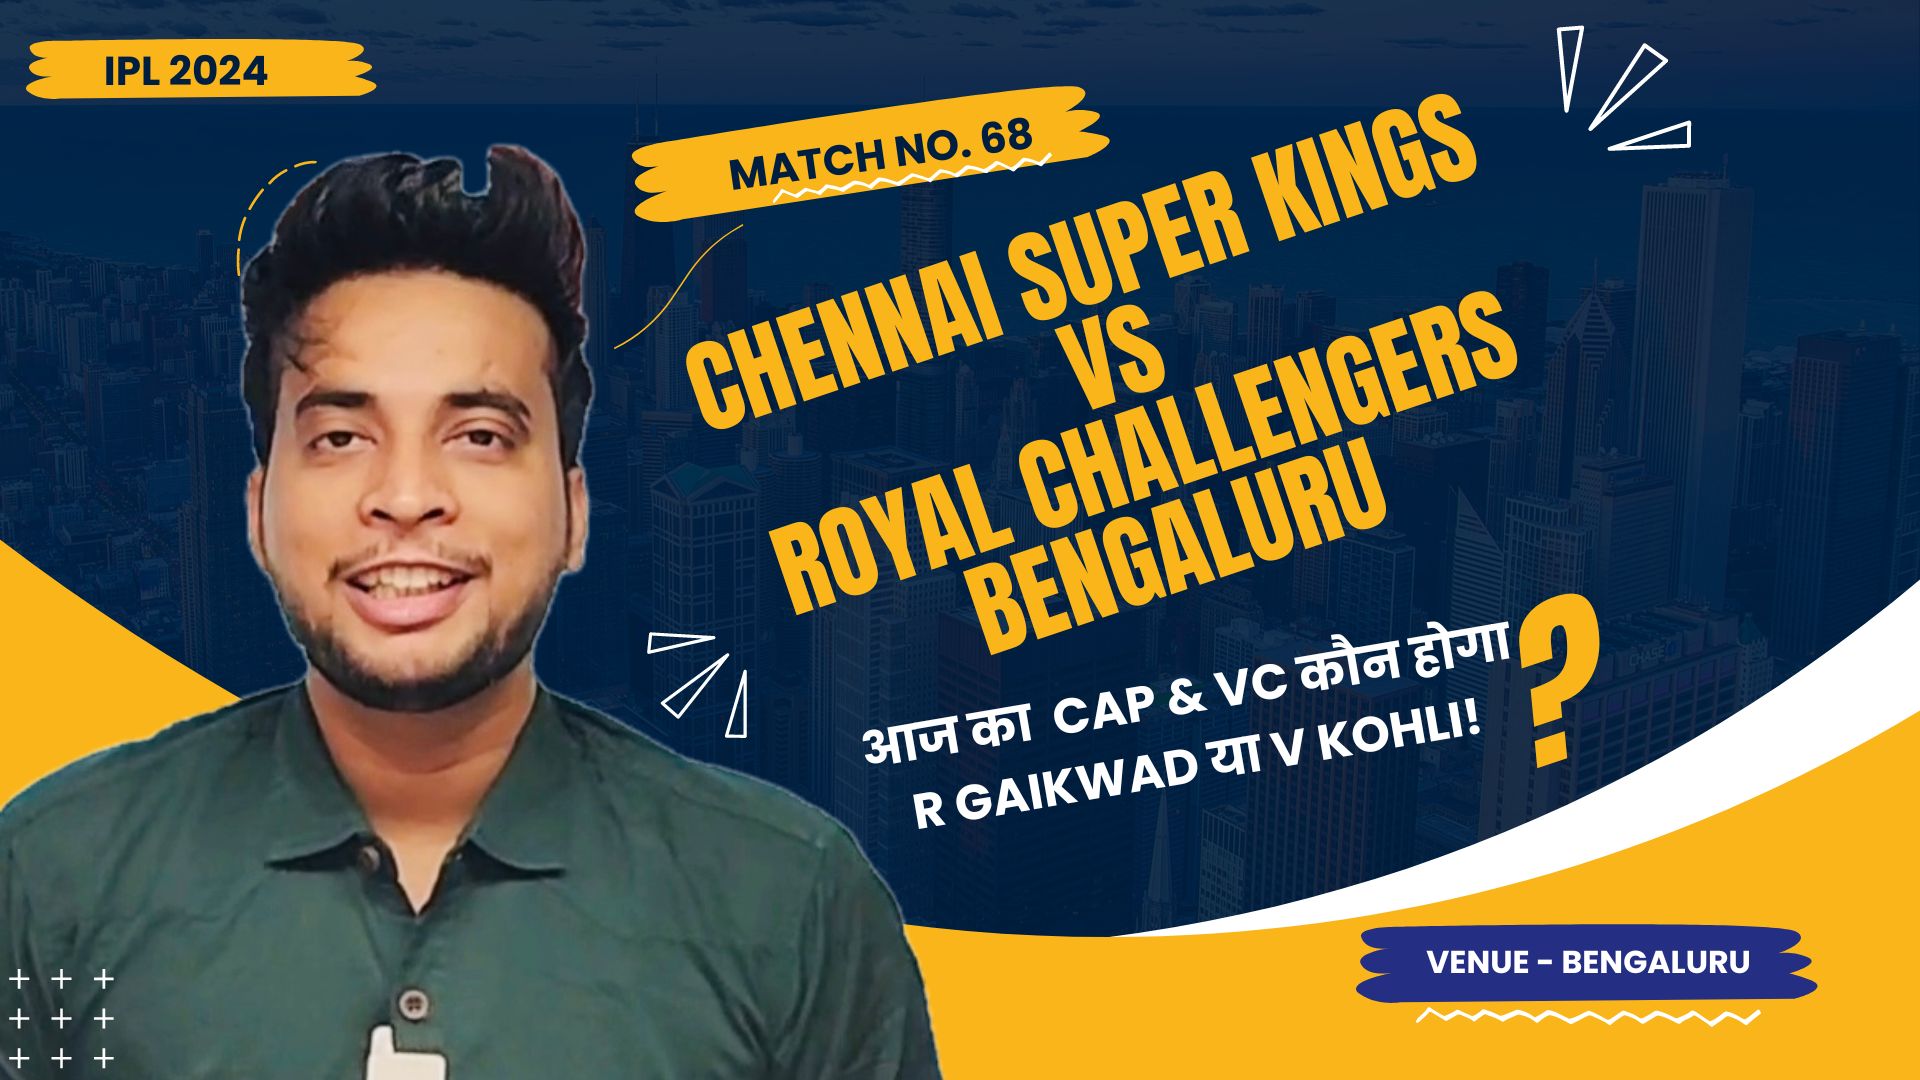 Match 68: Royal Challengers Bengaluru vs Chennai Super Kings | Fantasy Preview